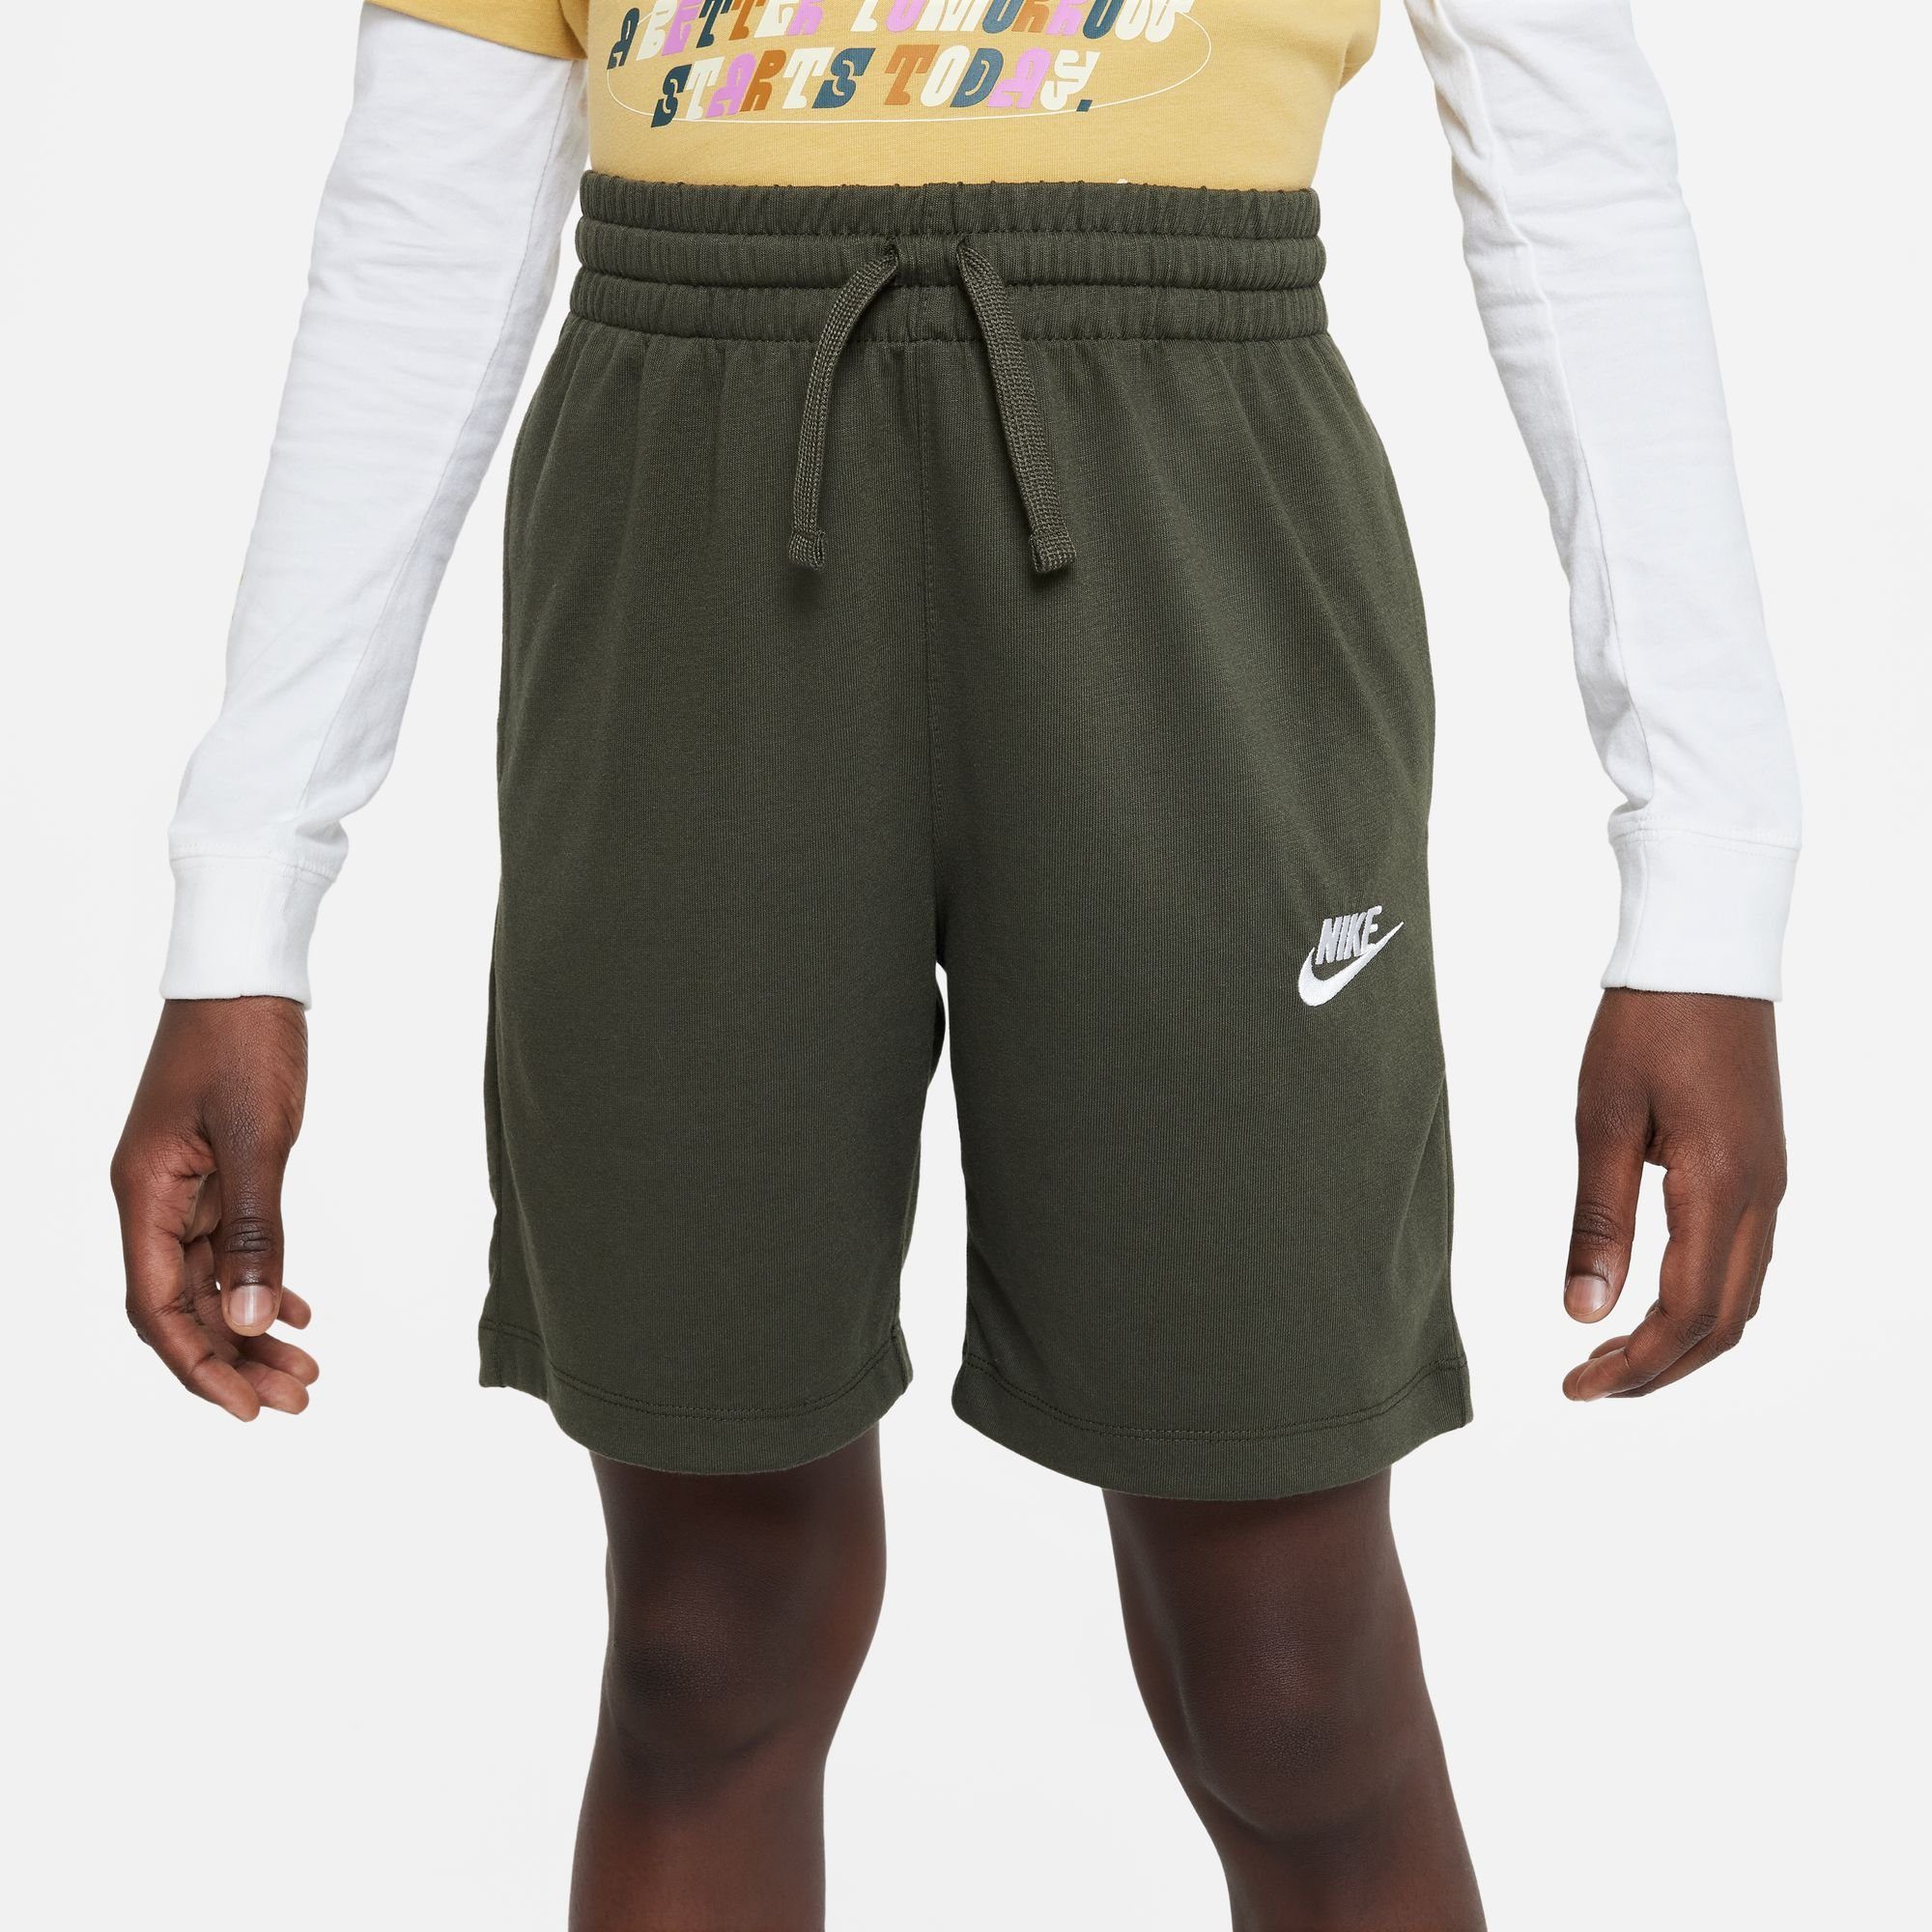 KIDS' KHAKI/WHITE CARGO Shorts (BOYS) Nike SHORTS Sportswear BIG JERSEY